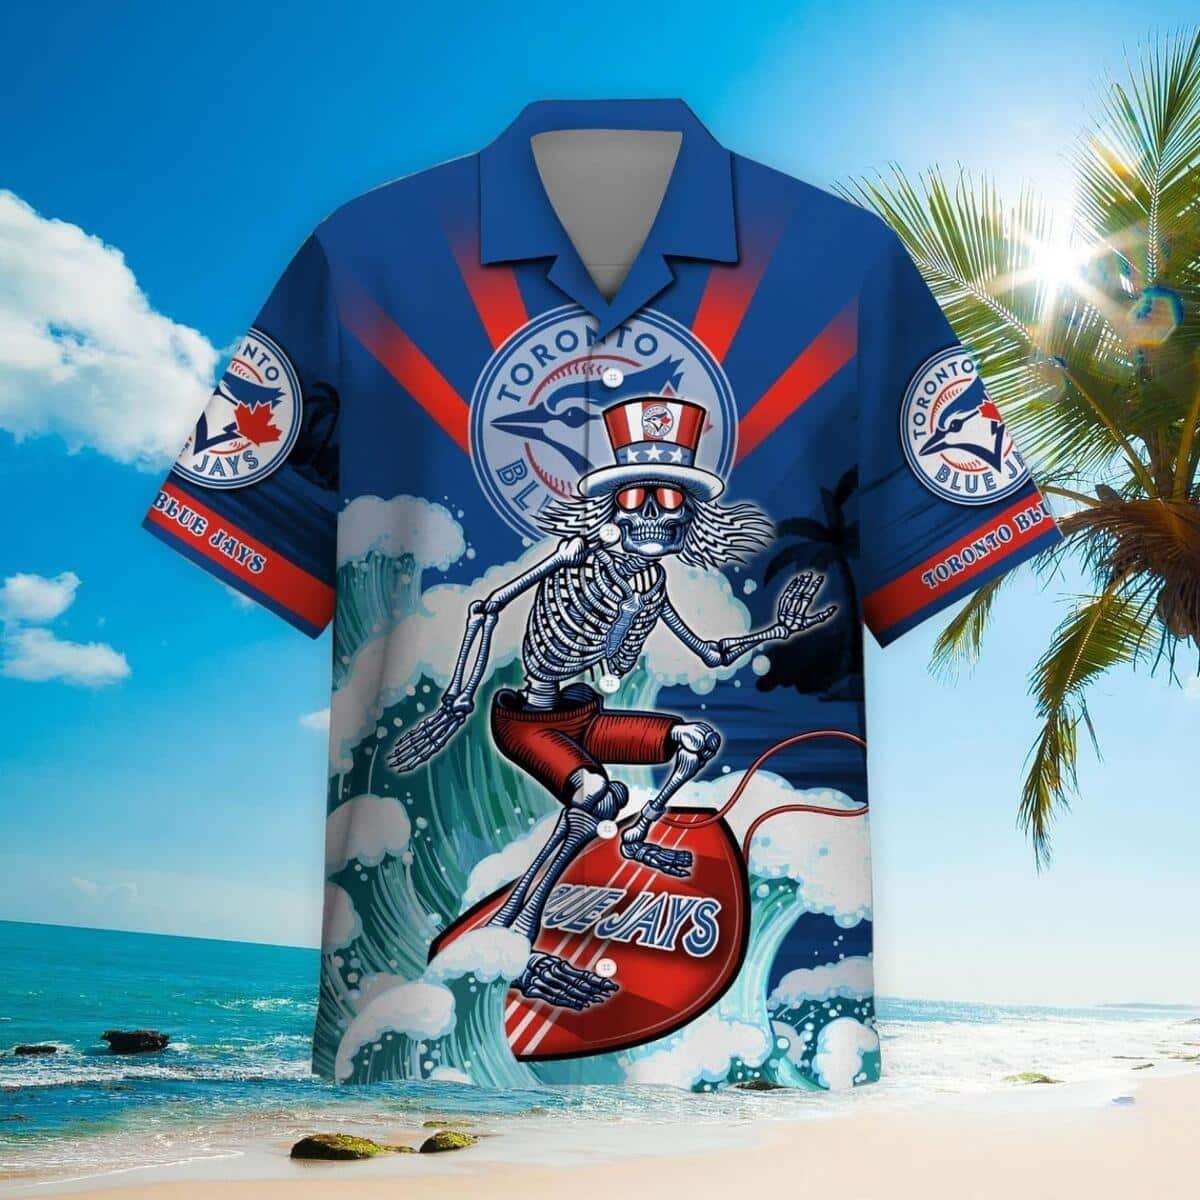 TRENDING] Toronto Blue Jays MLB-Personalized Hawaiian Shirt